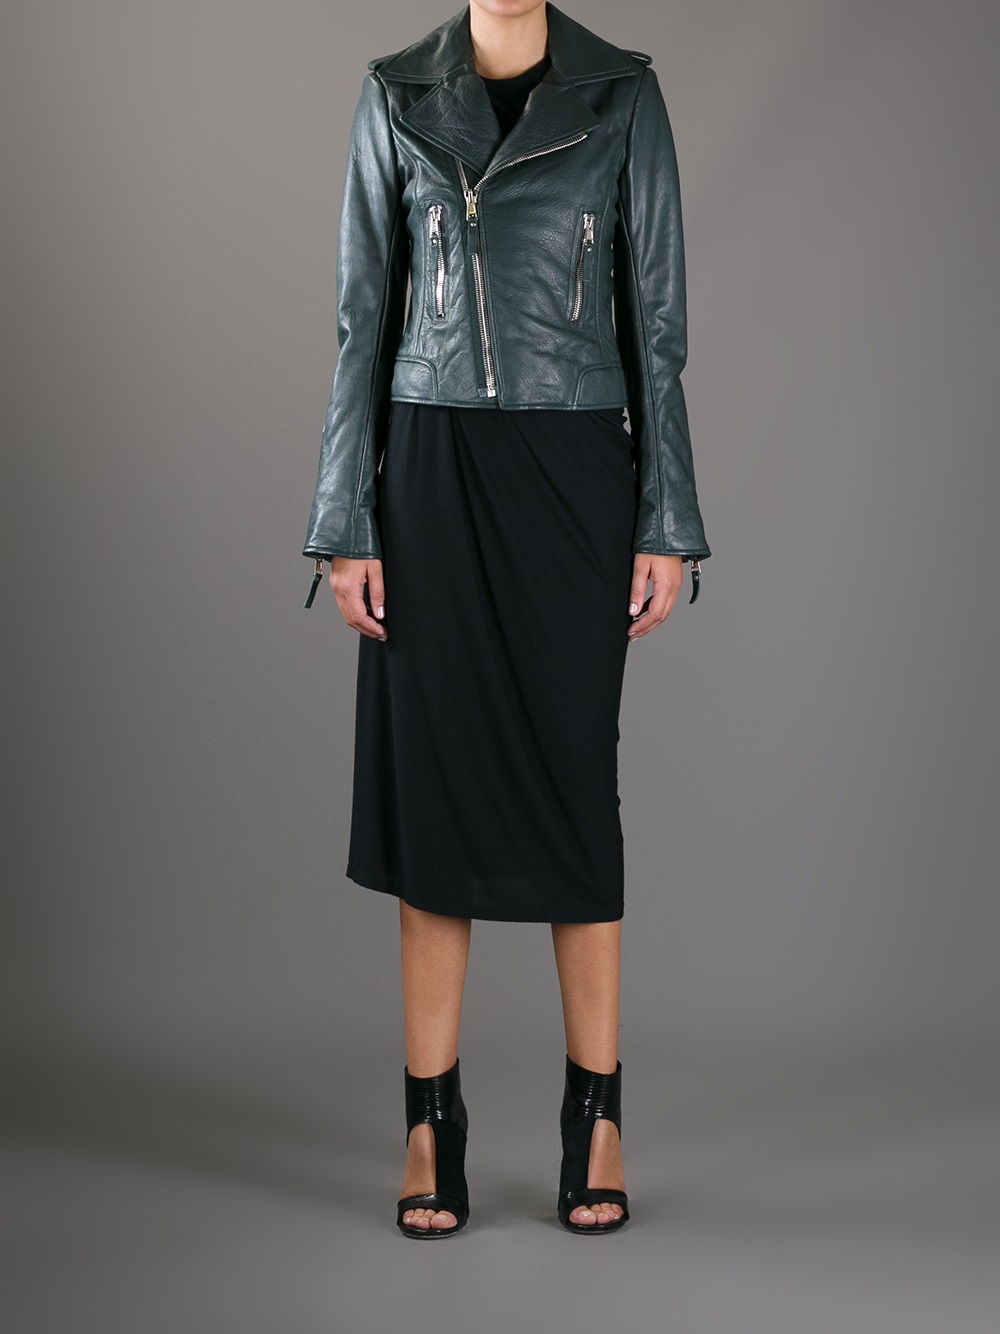 Balenciaga Leather Jacket - Lyst